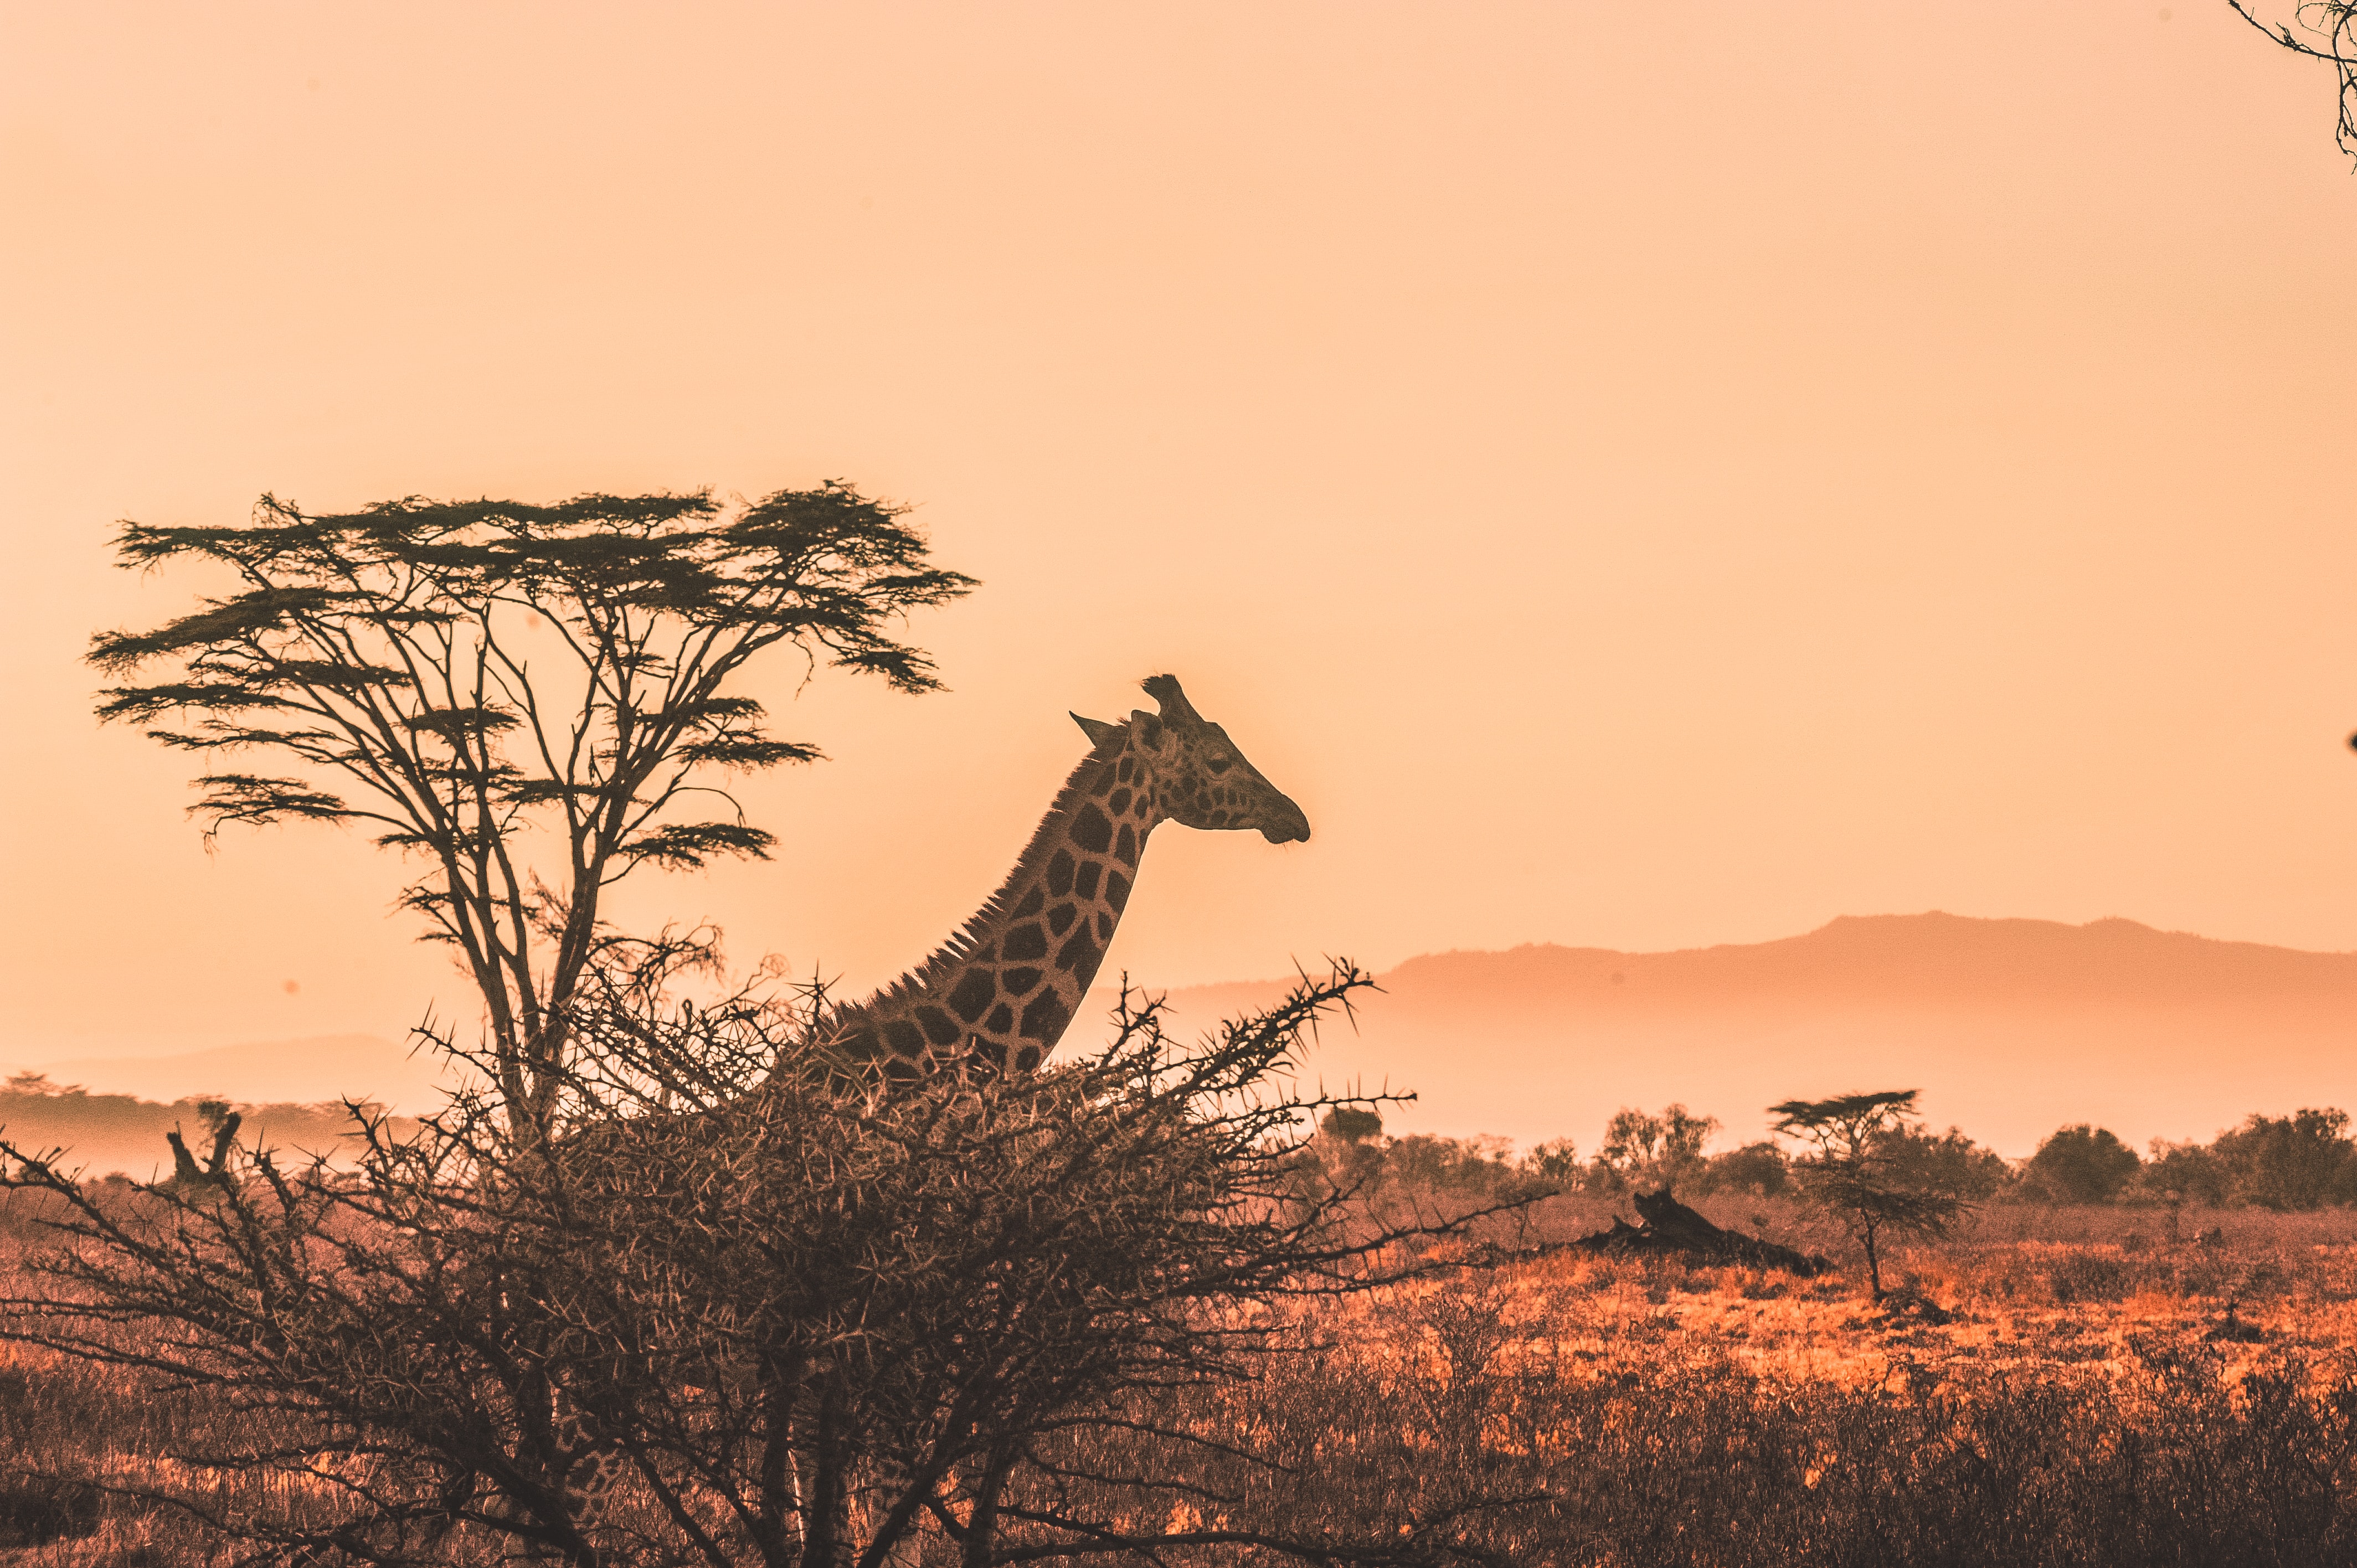 Photo of a giraffe in the wild